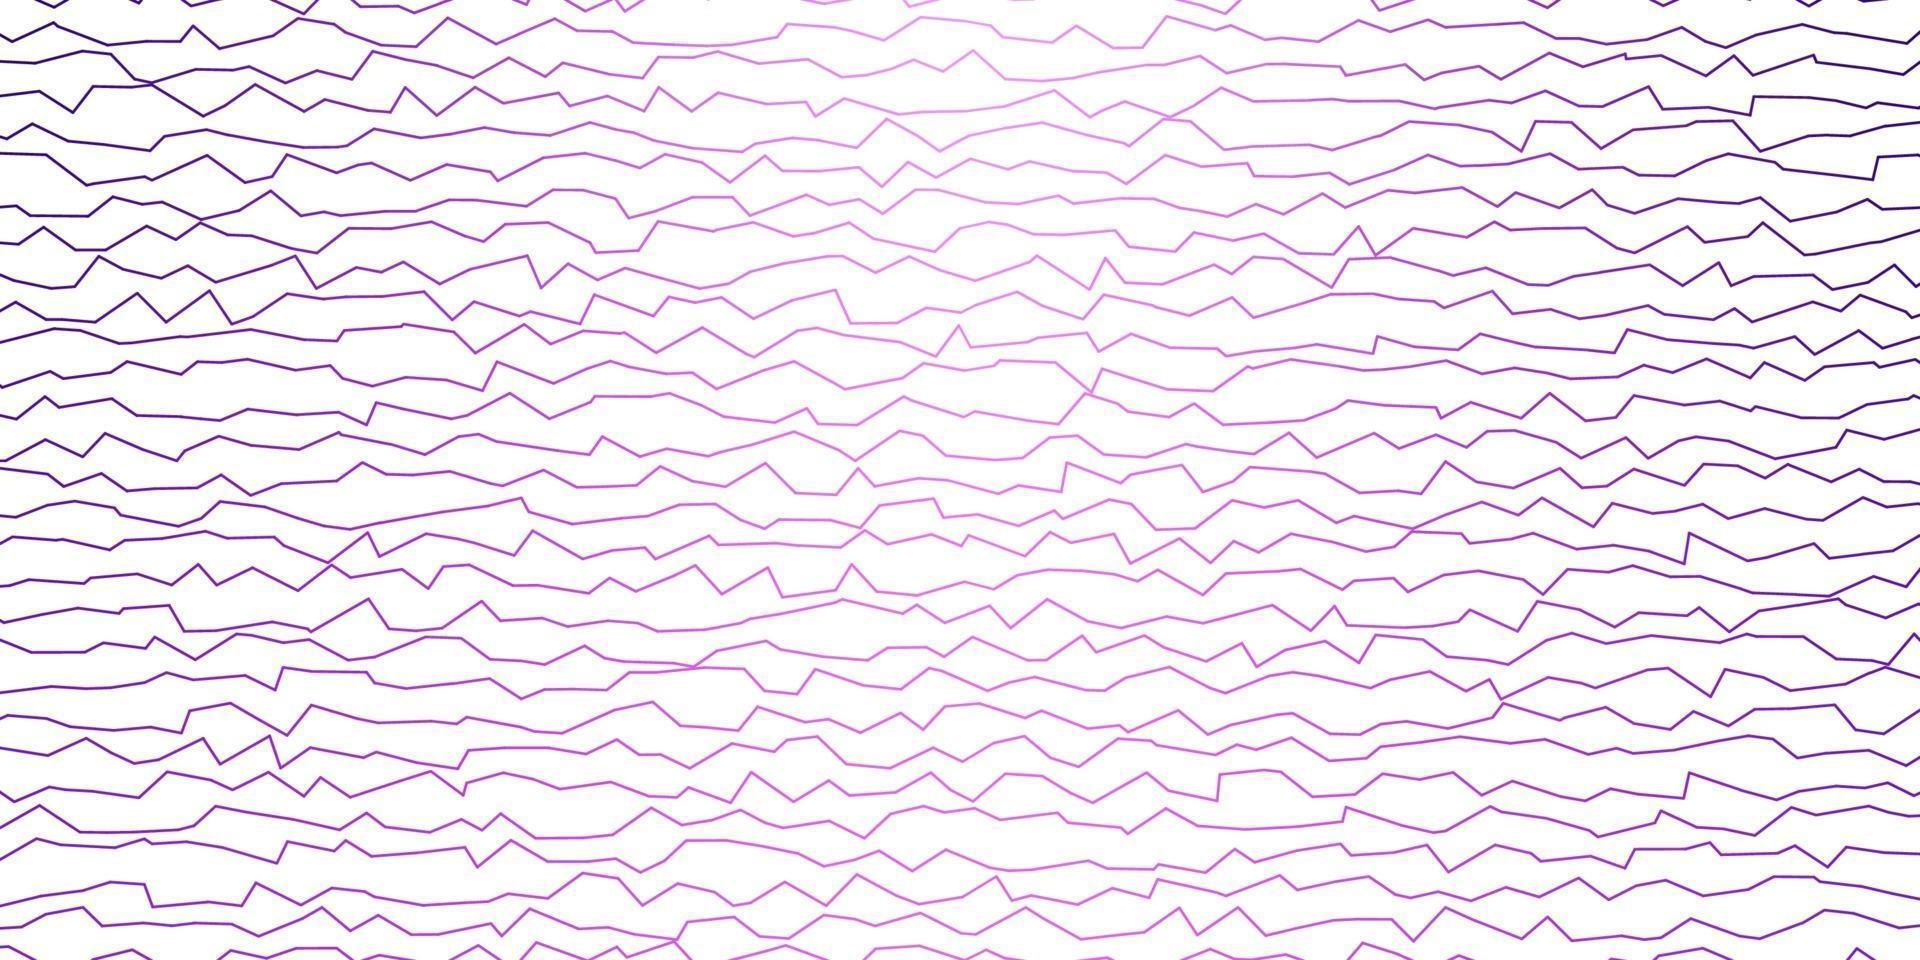 mörkrosa vektorbakgrund med sneda linjer. vektor